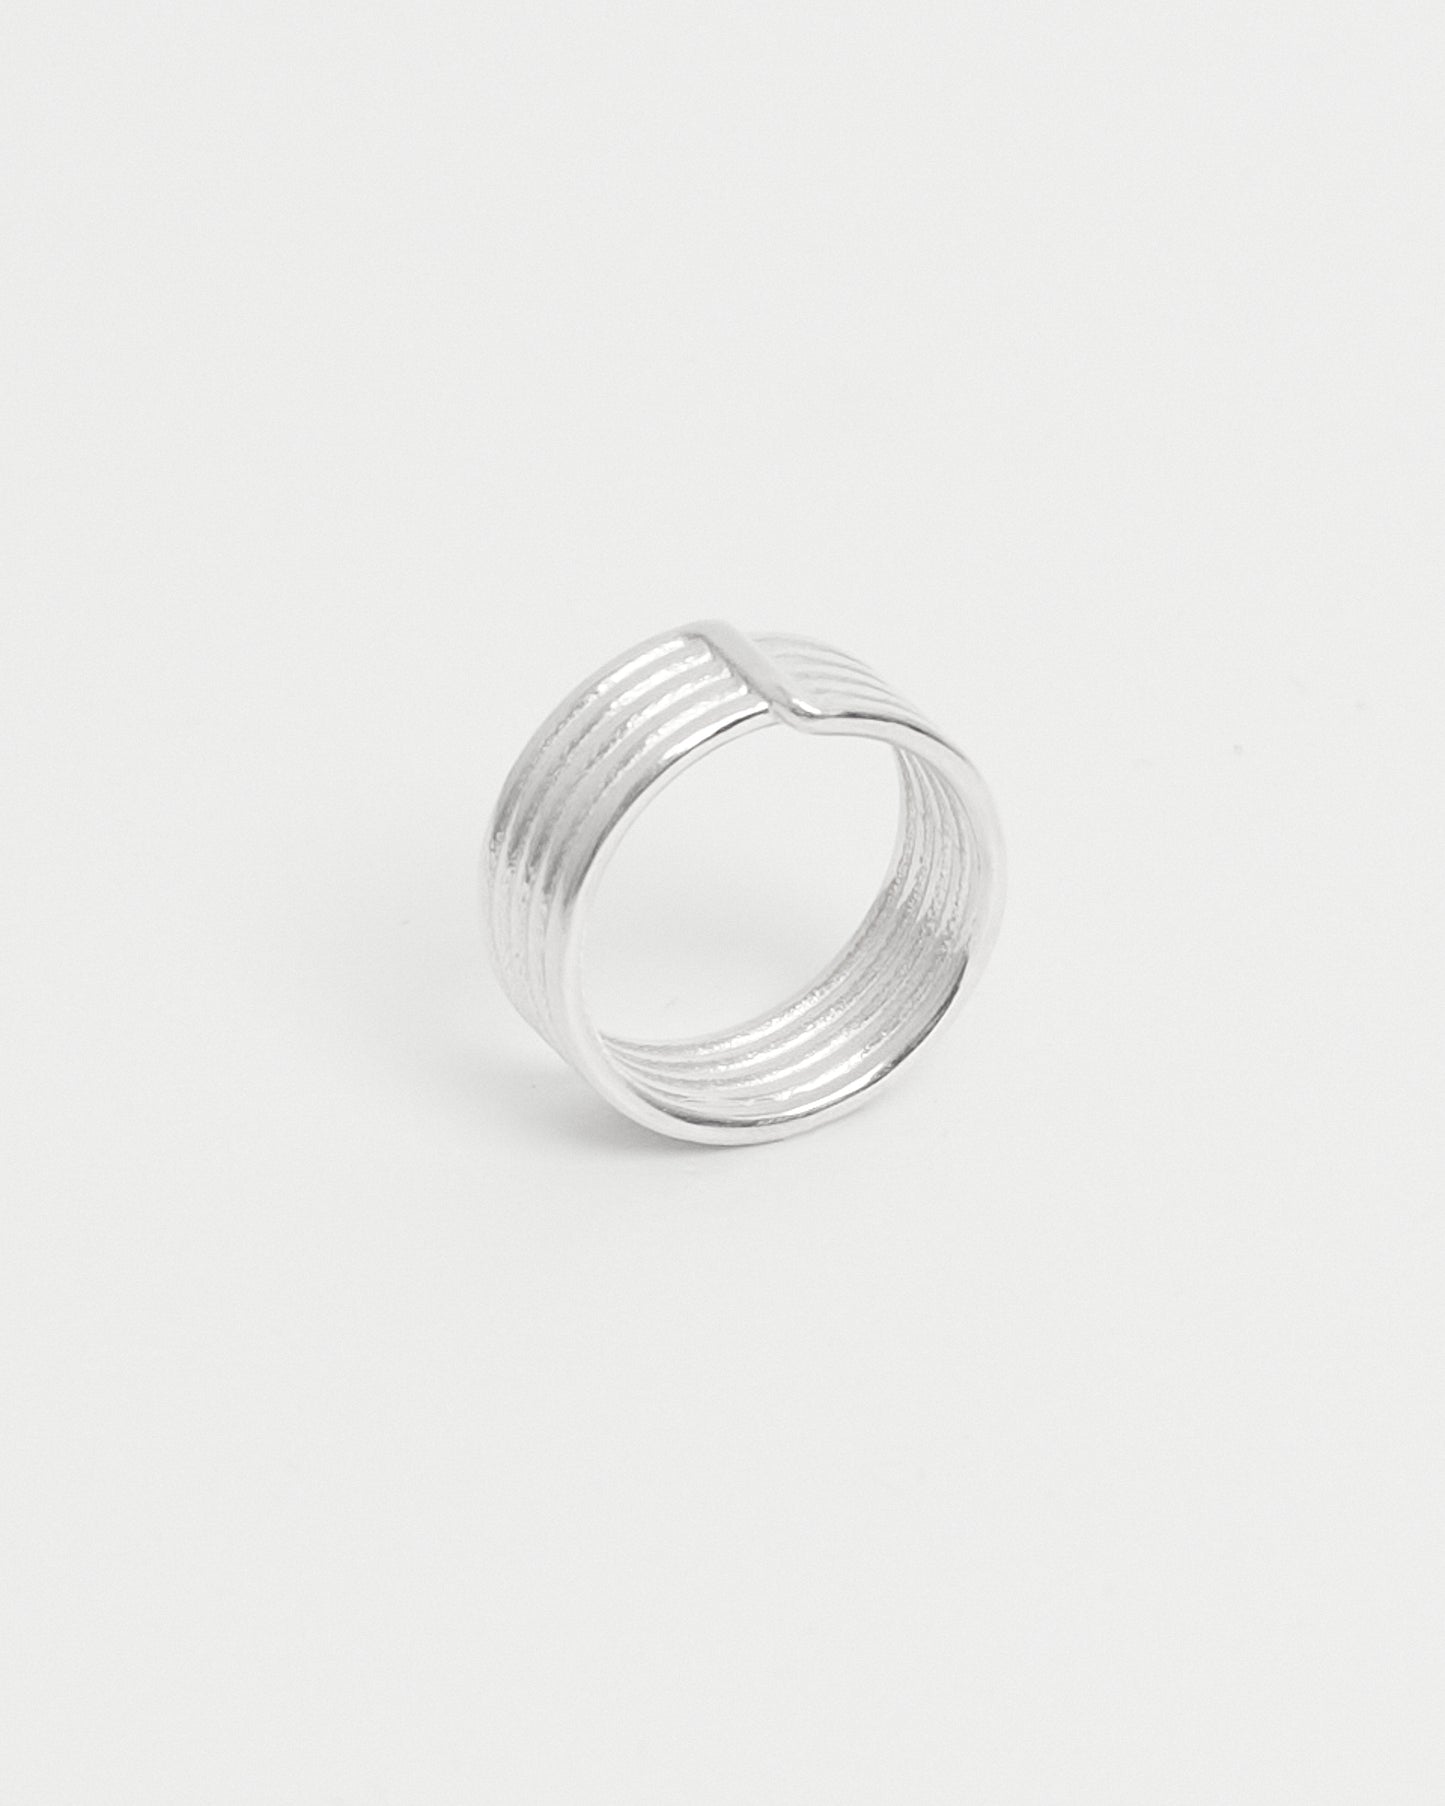 Spiral Ring <s-005>